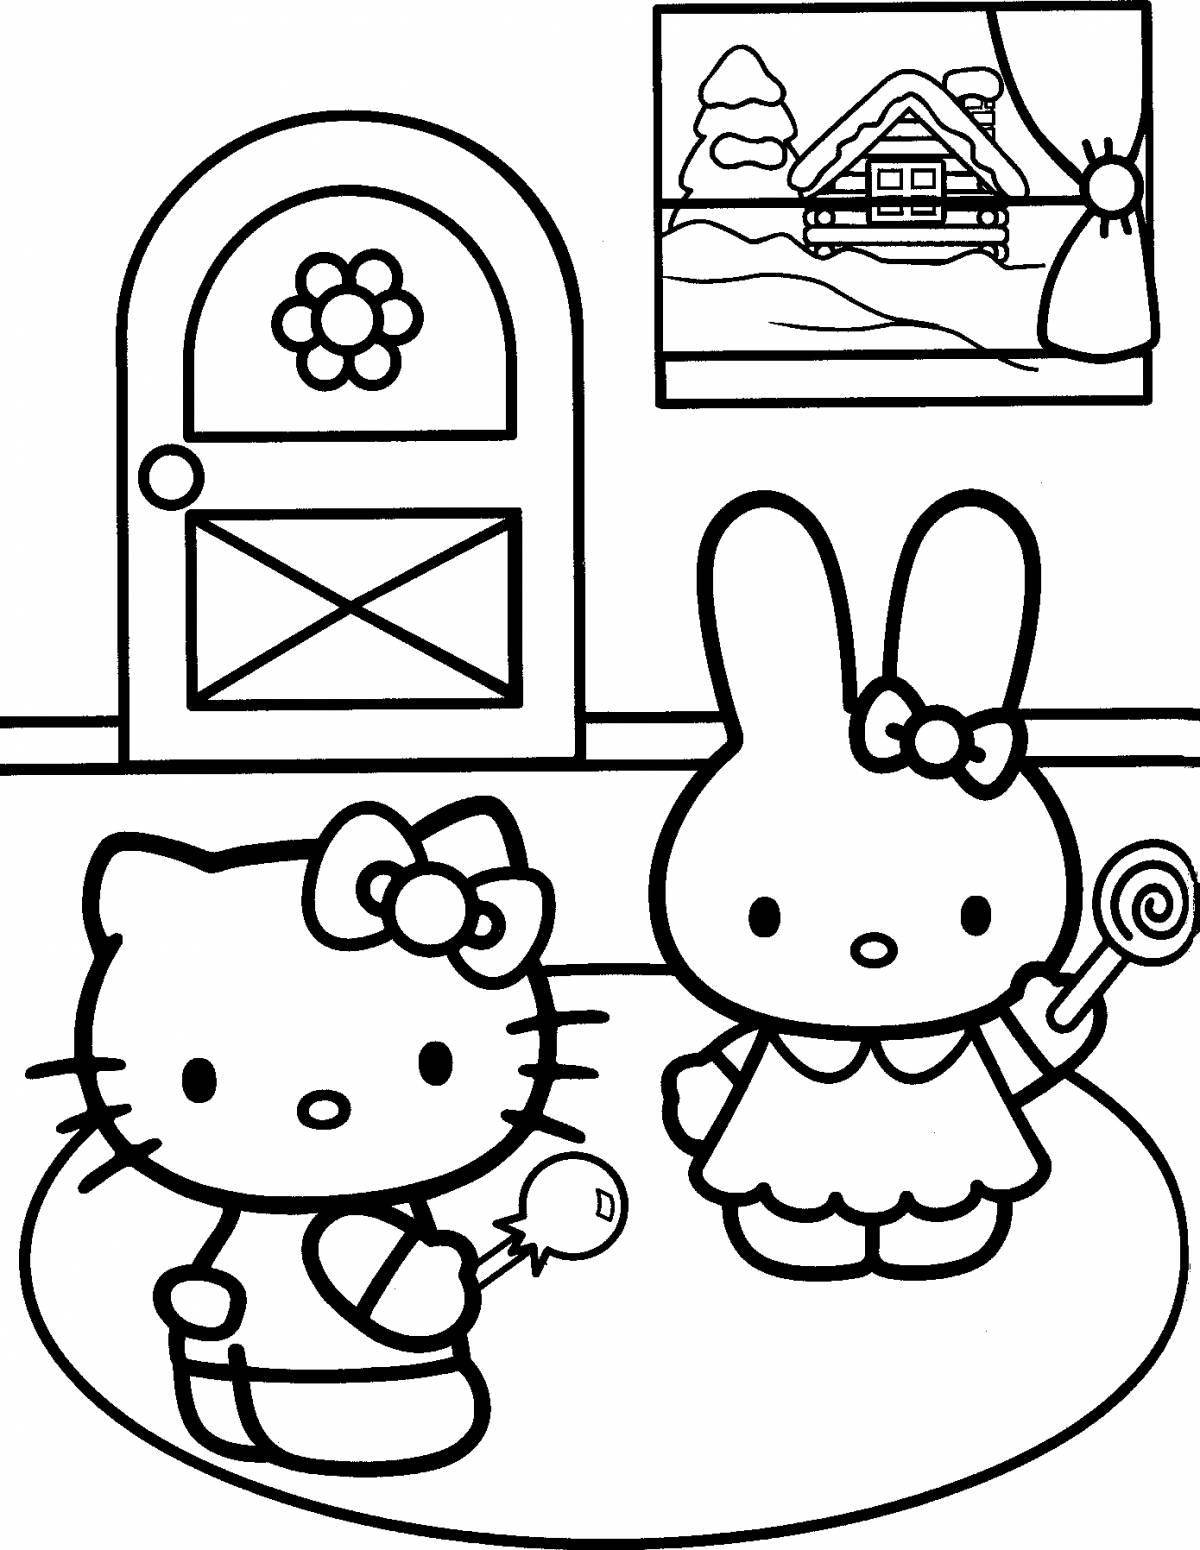 Cute cat and rabbit coloring book